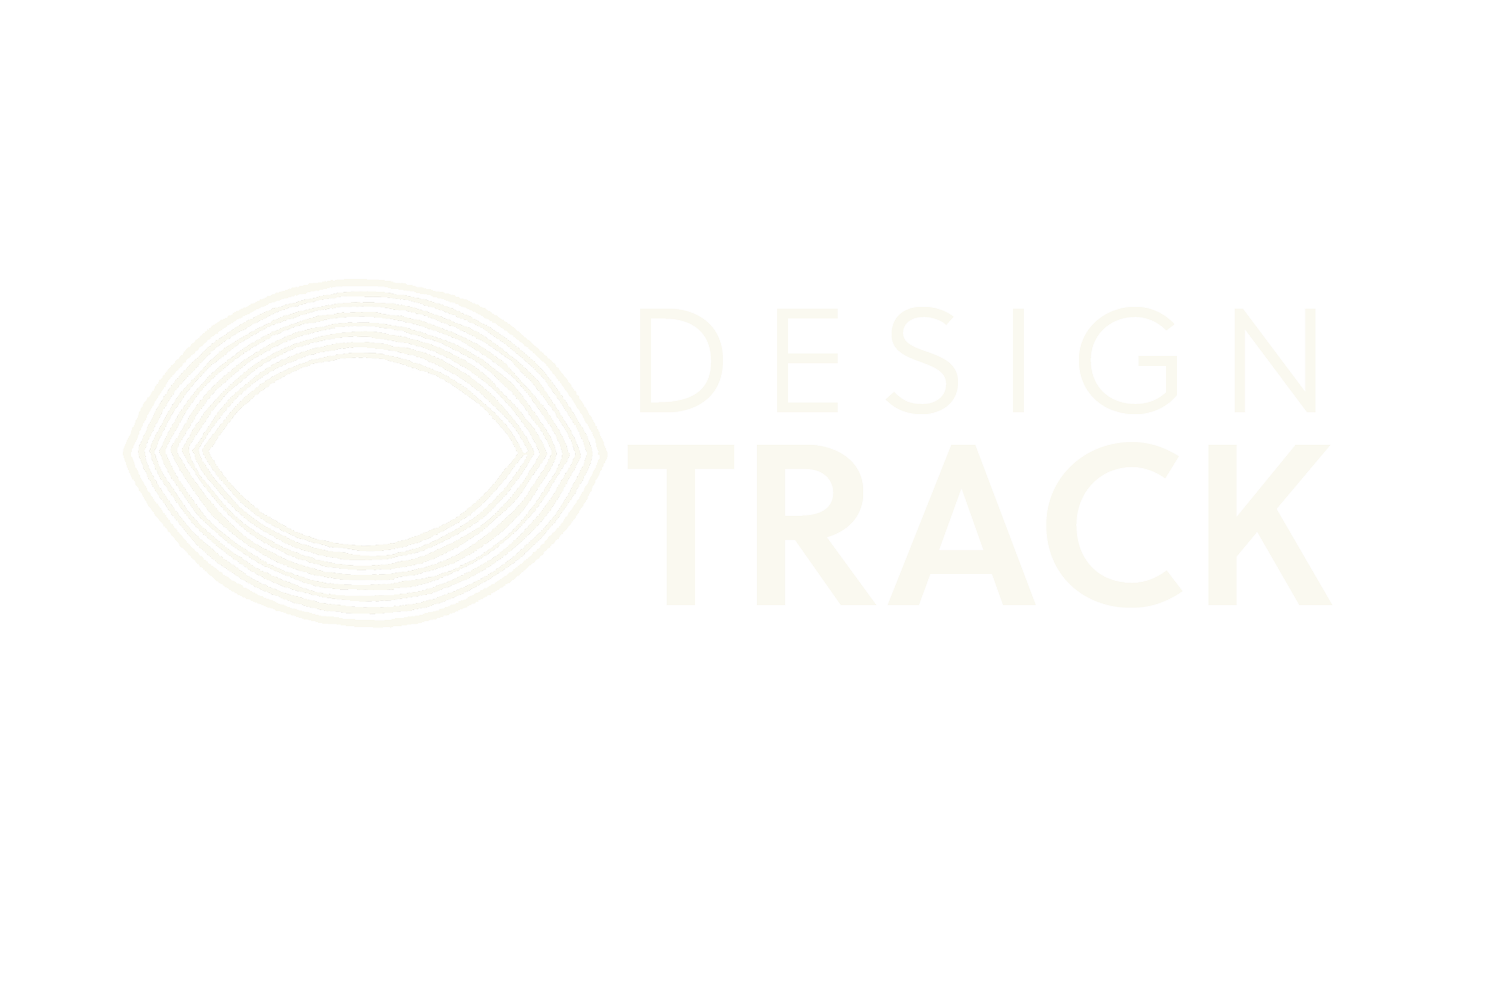 DESIGN TRACK | an integrated design studio